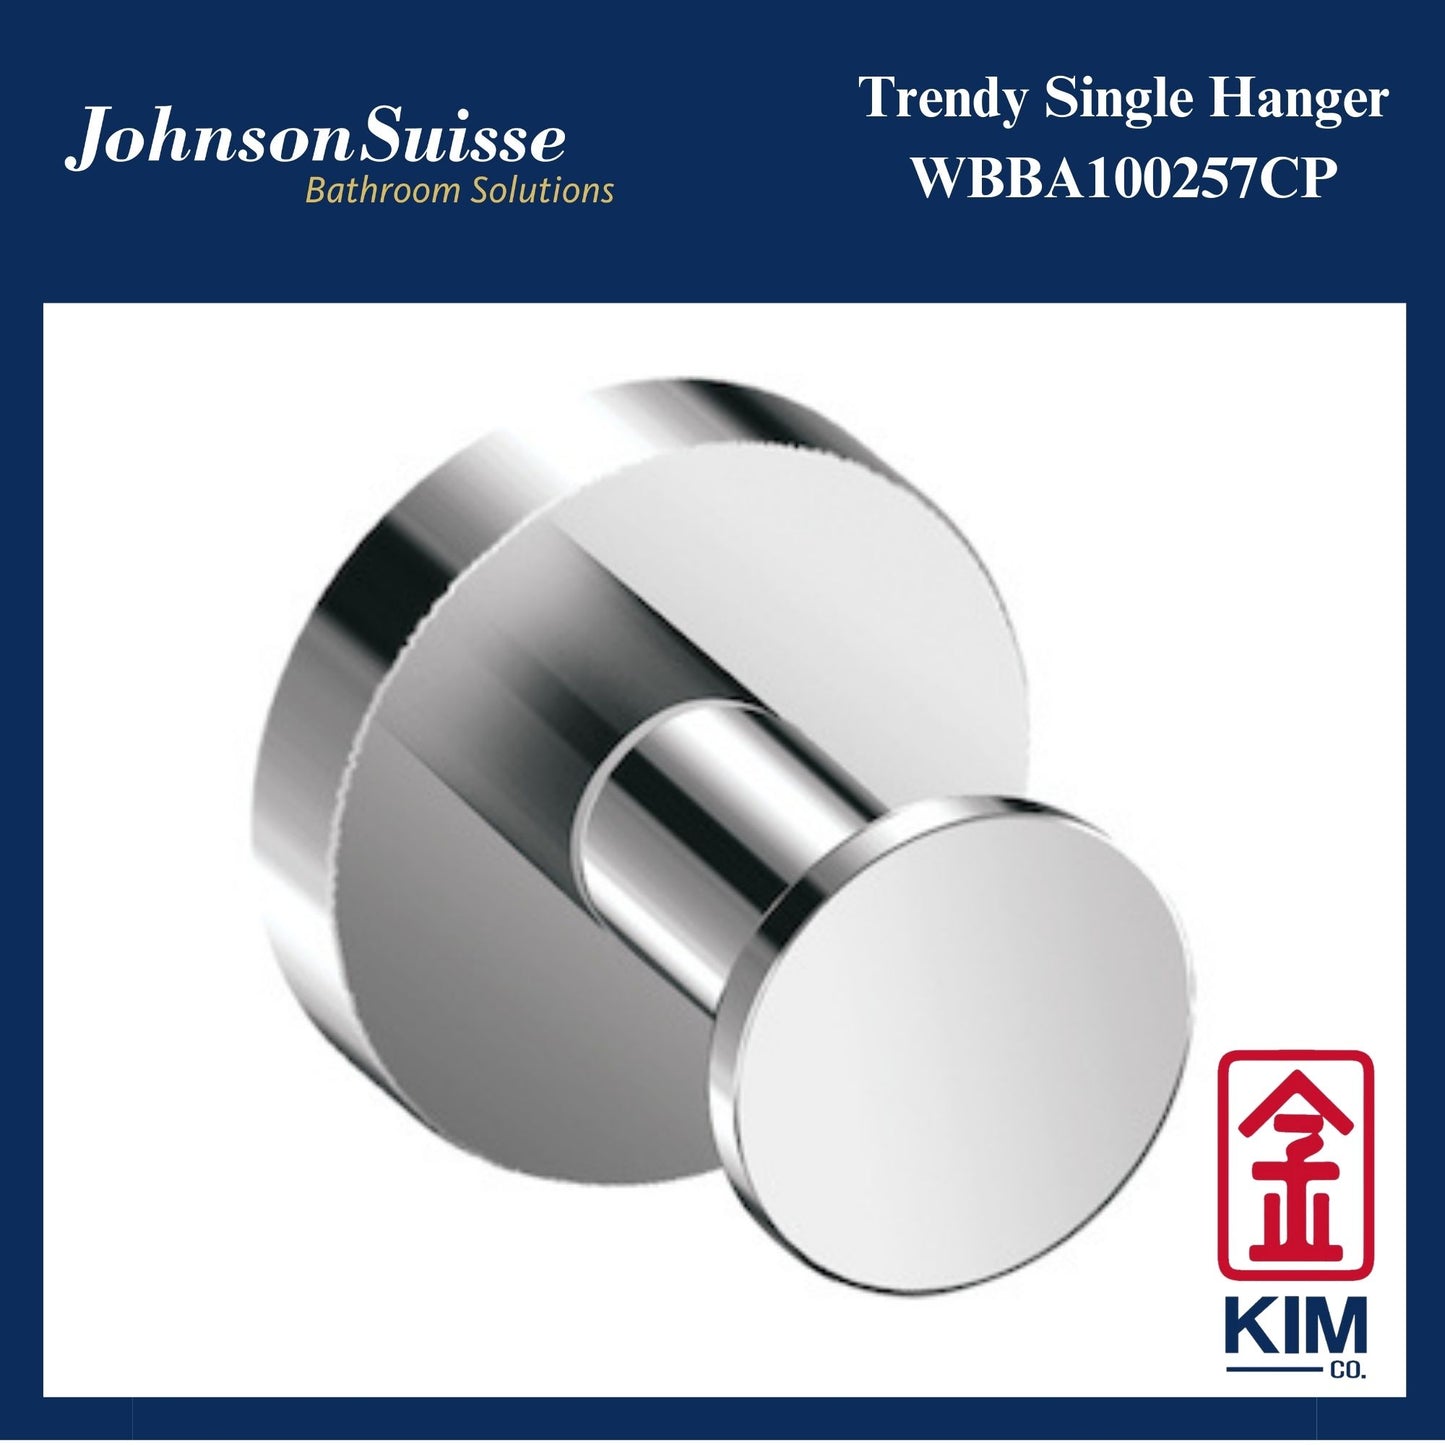 Johnson Suisse Trendy Hanger (WBBA100257CP)